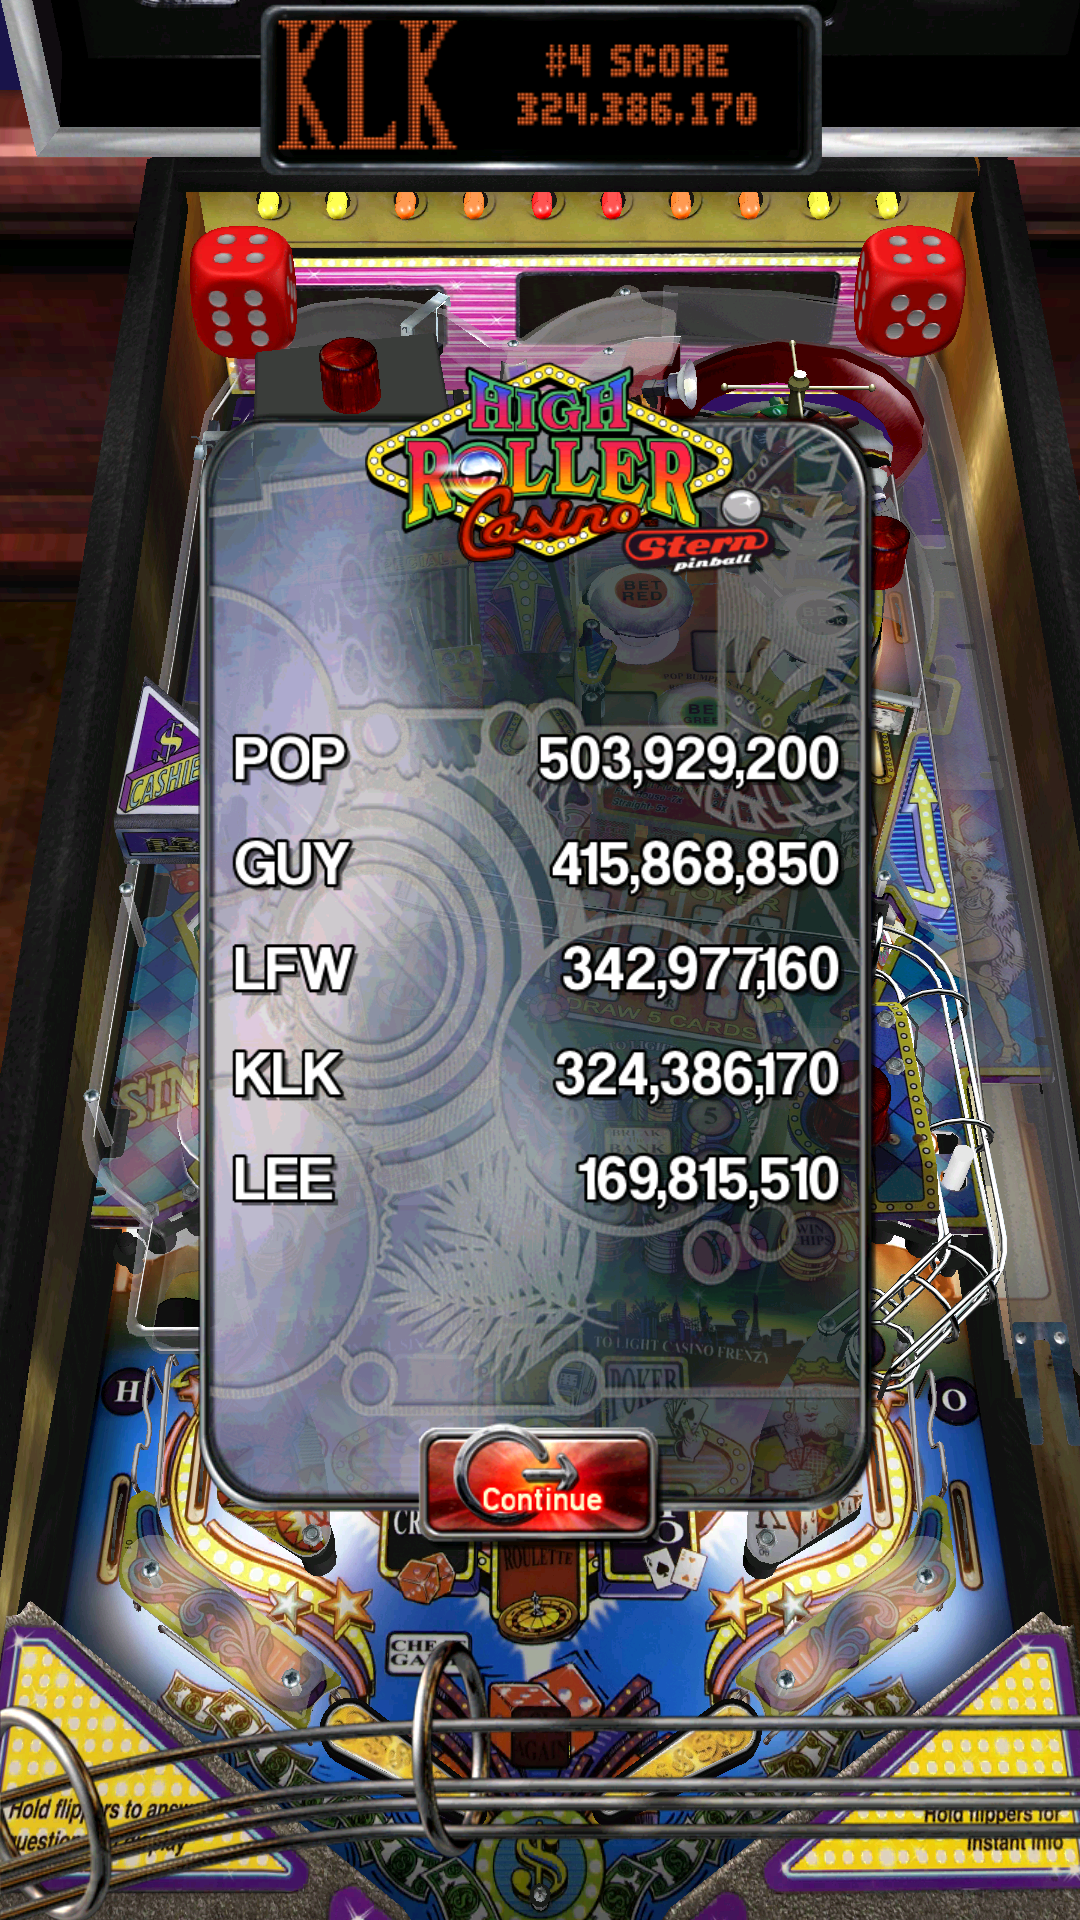 Pinball Arcade: High Roller Casino 169,815,510 points